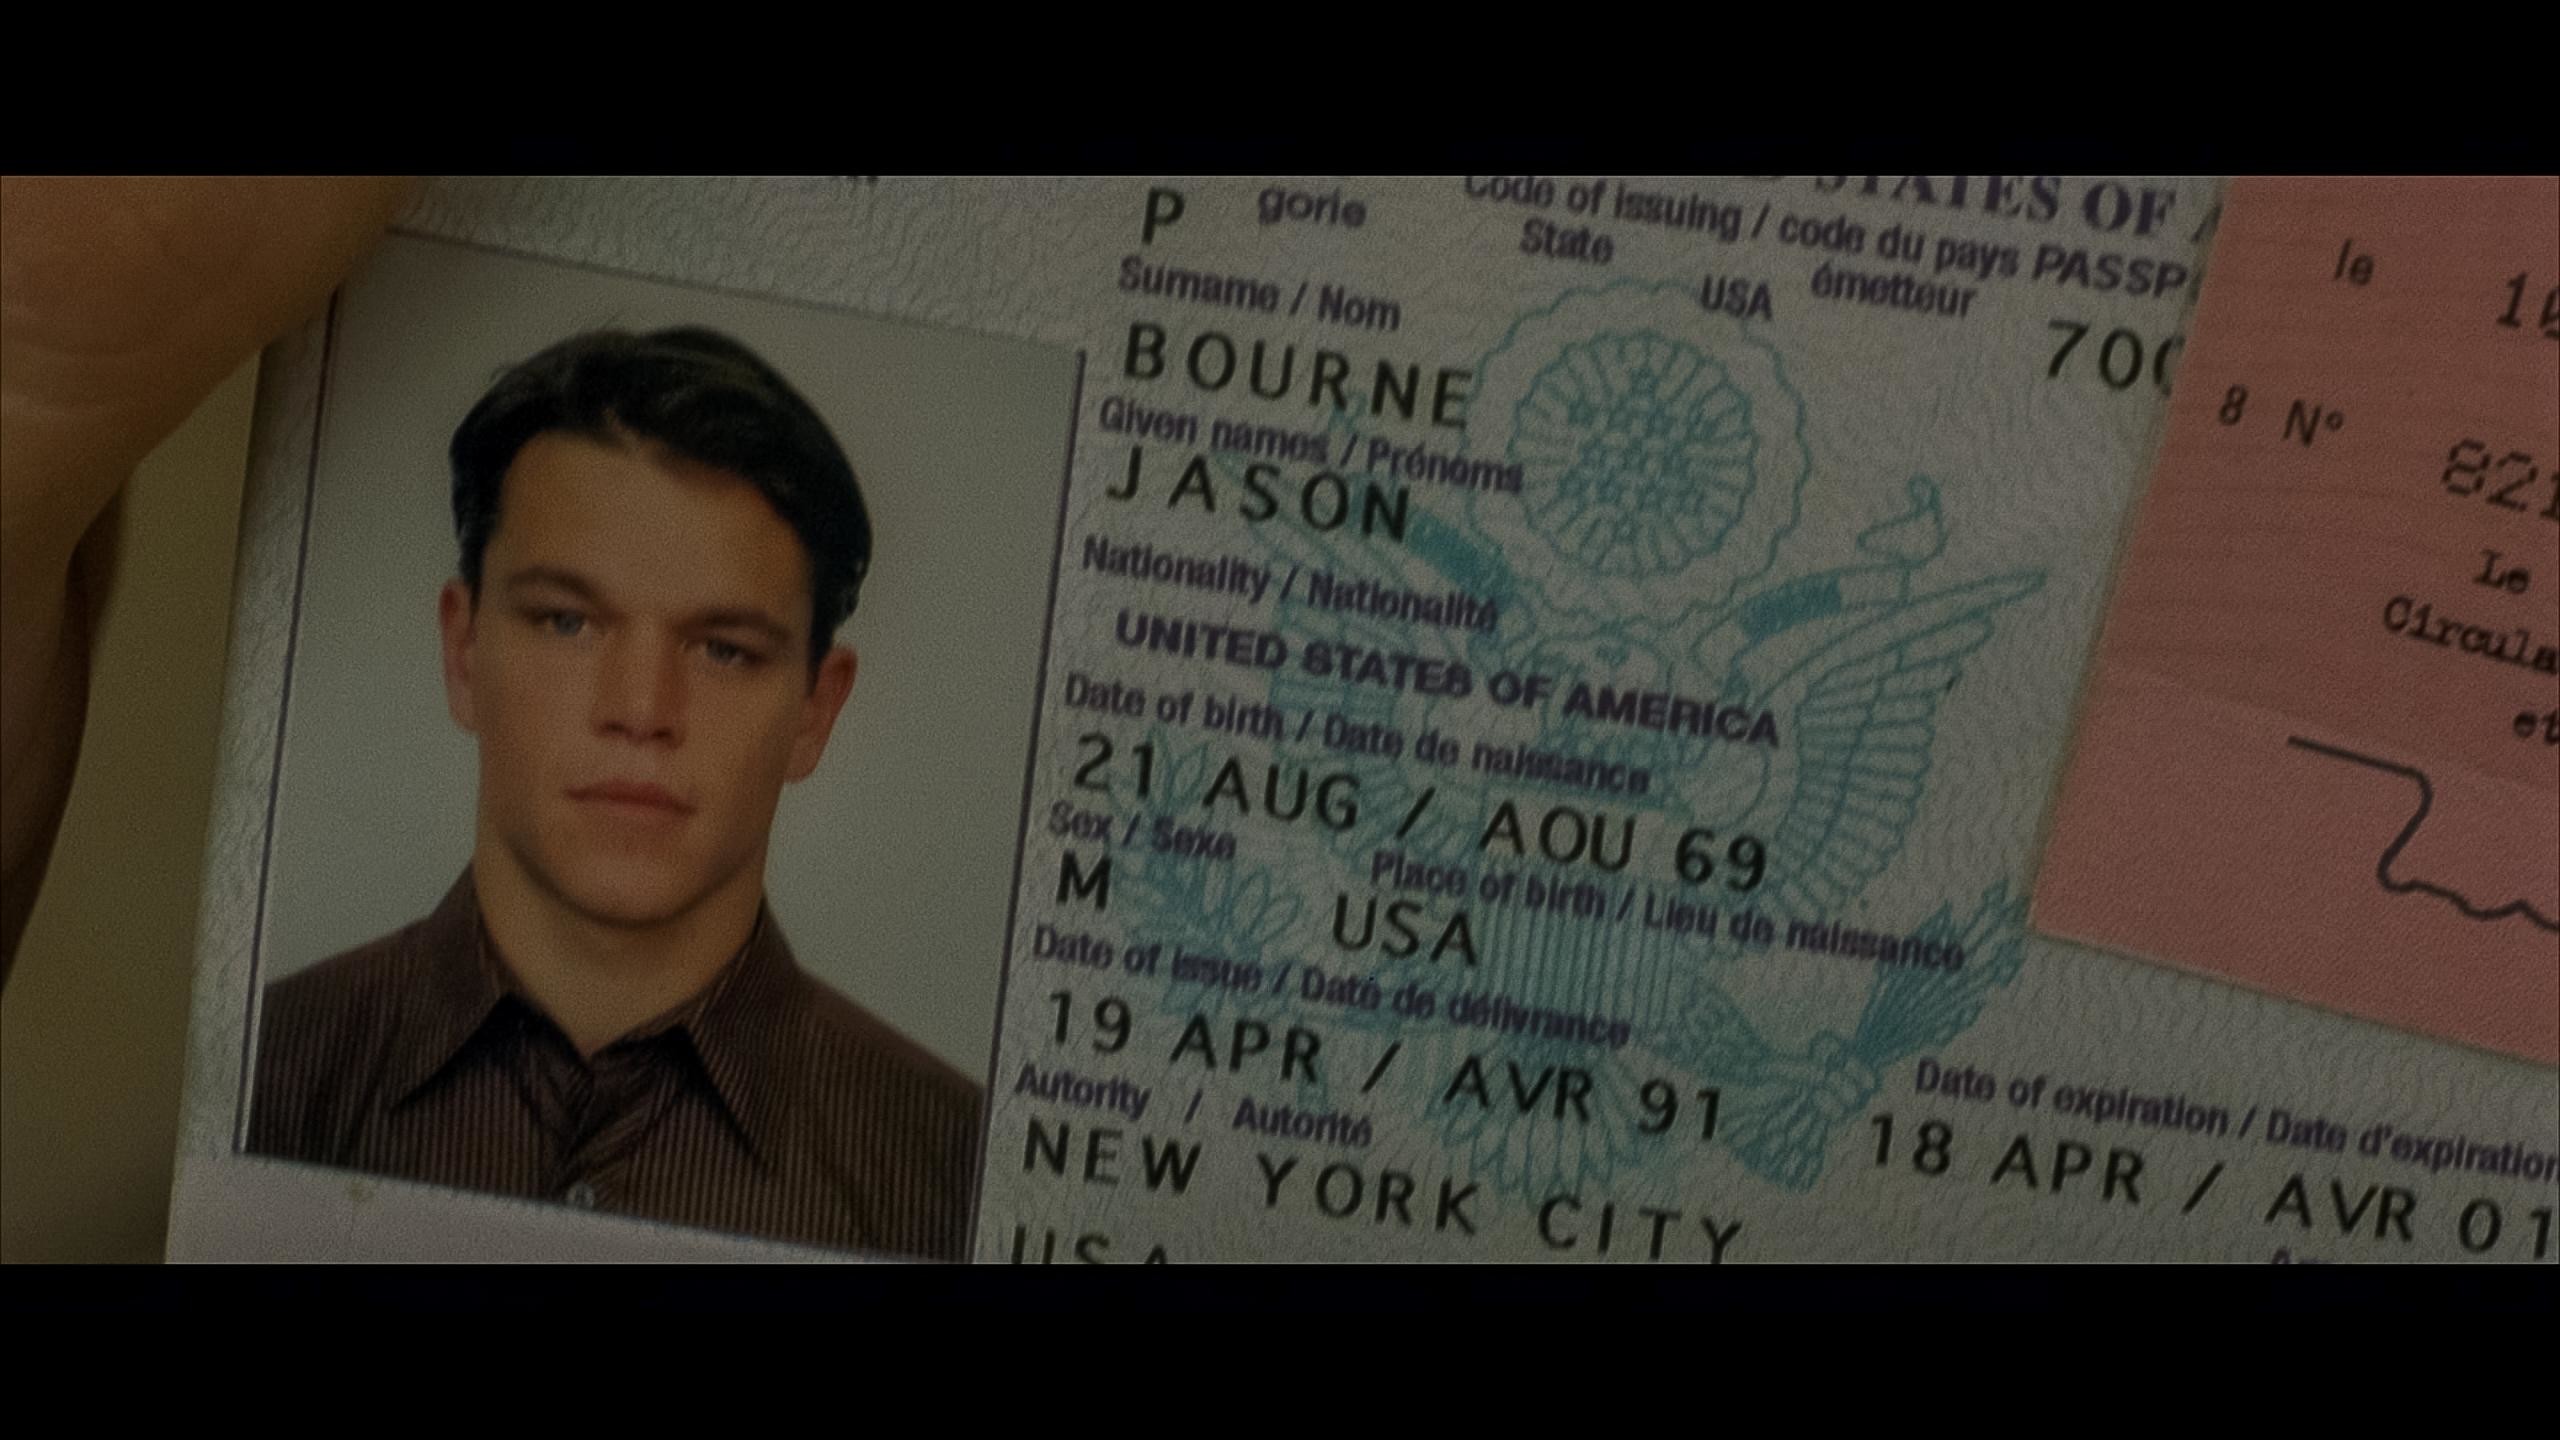 2560x1440, Jason Bourne Wallpaper - Bourne Identity Jason Bourne -  2560x1440 Wallpaper 